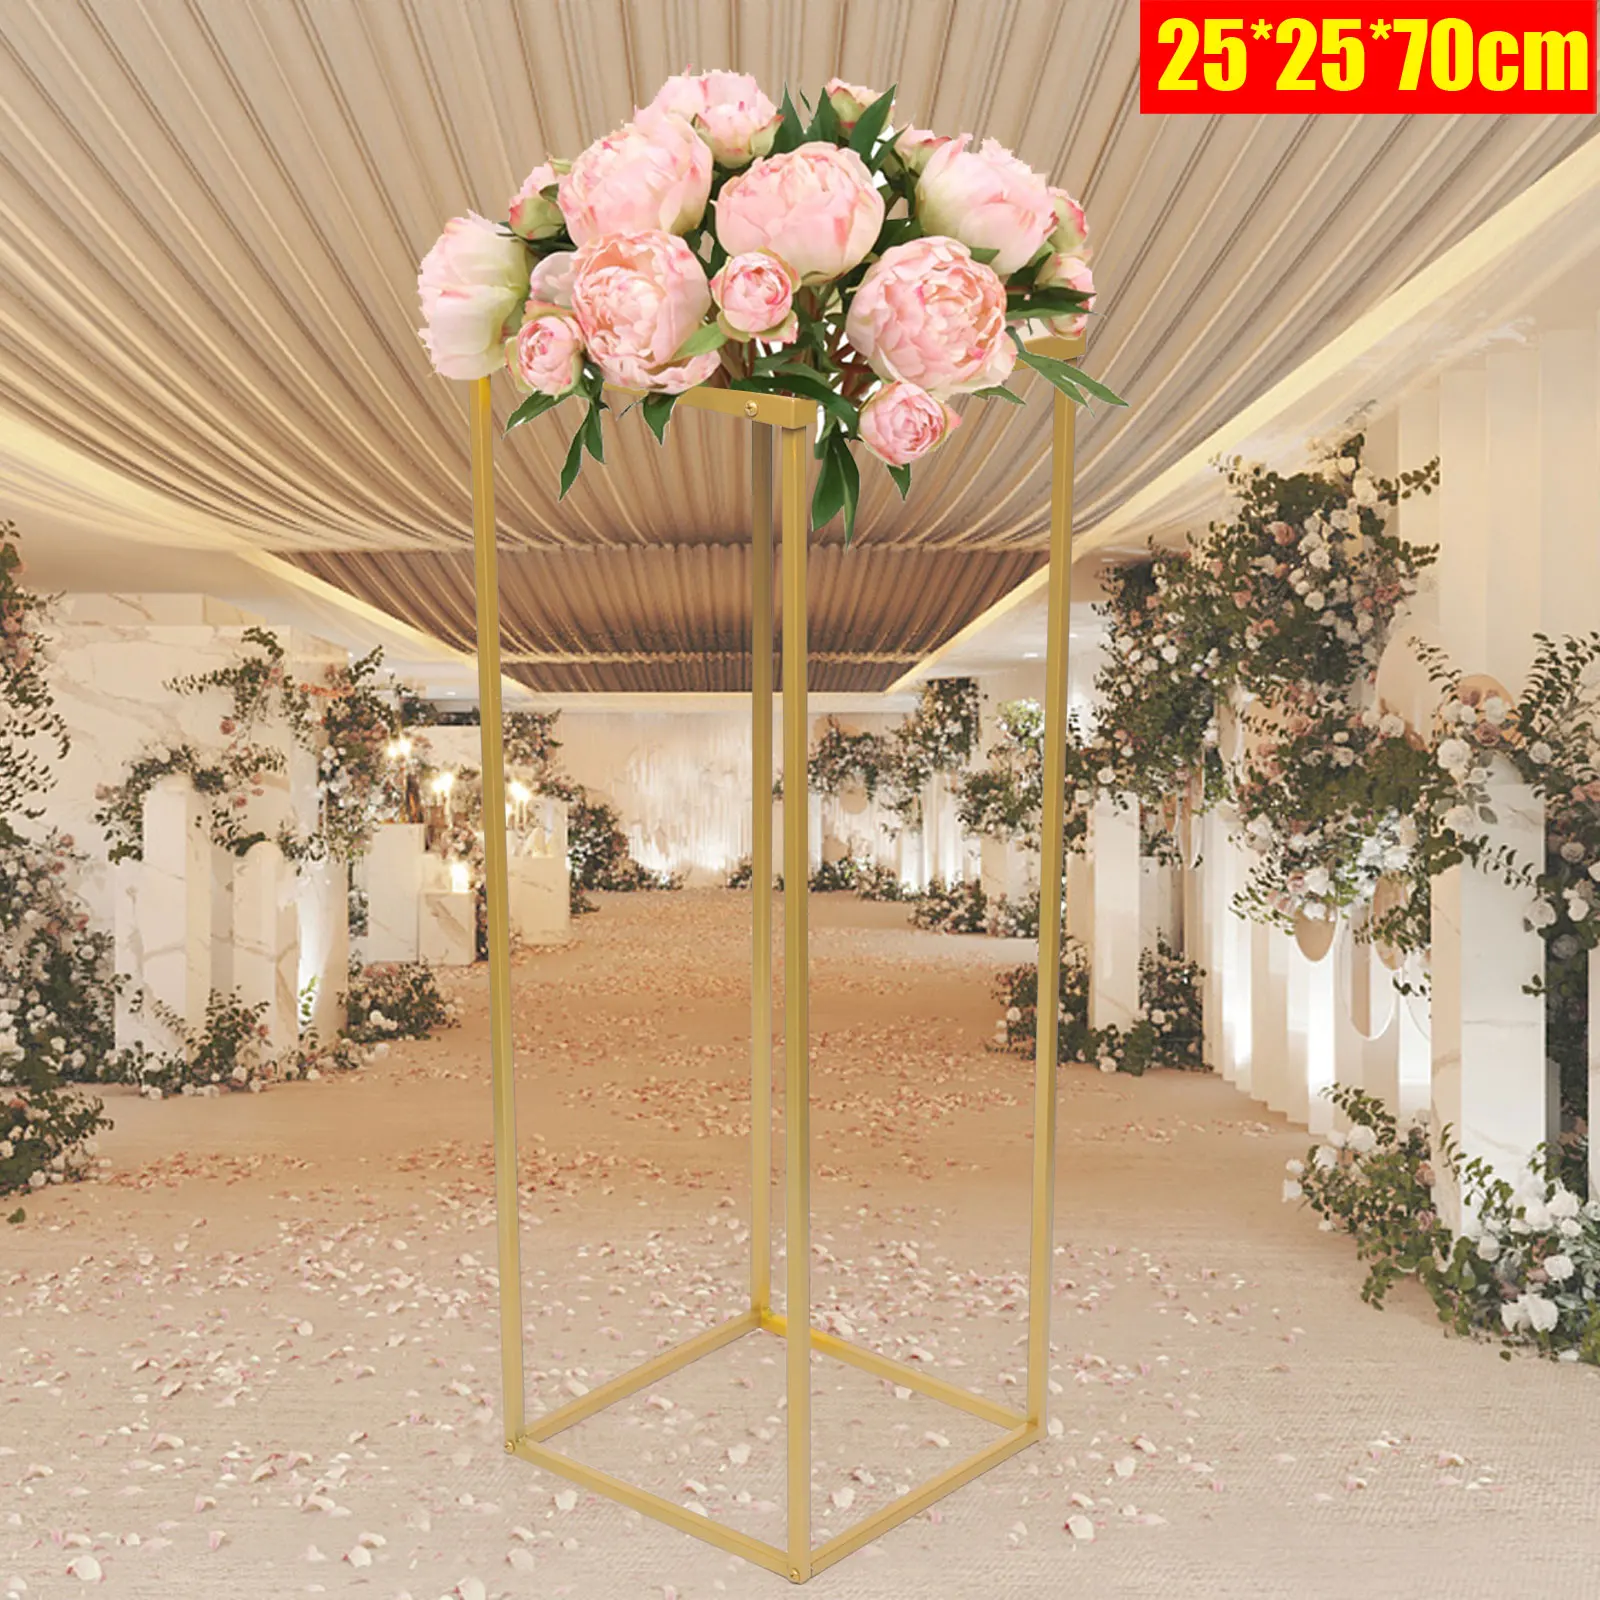 

Wedding Flower Stand-70cm Rectangle Frame Wedding Gold Metal Flower Stand Tabletop Decoration Celebration Venue Road Guide